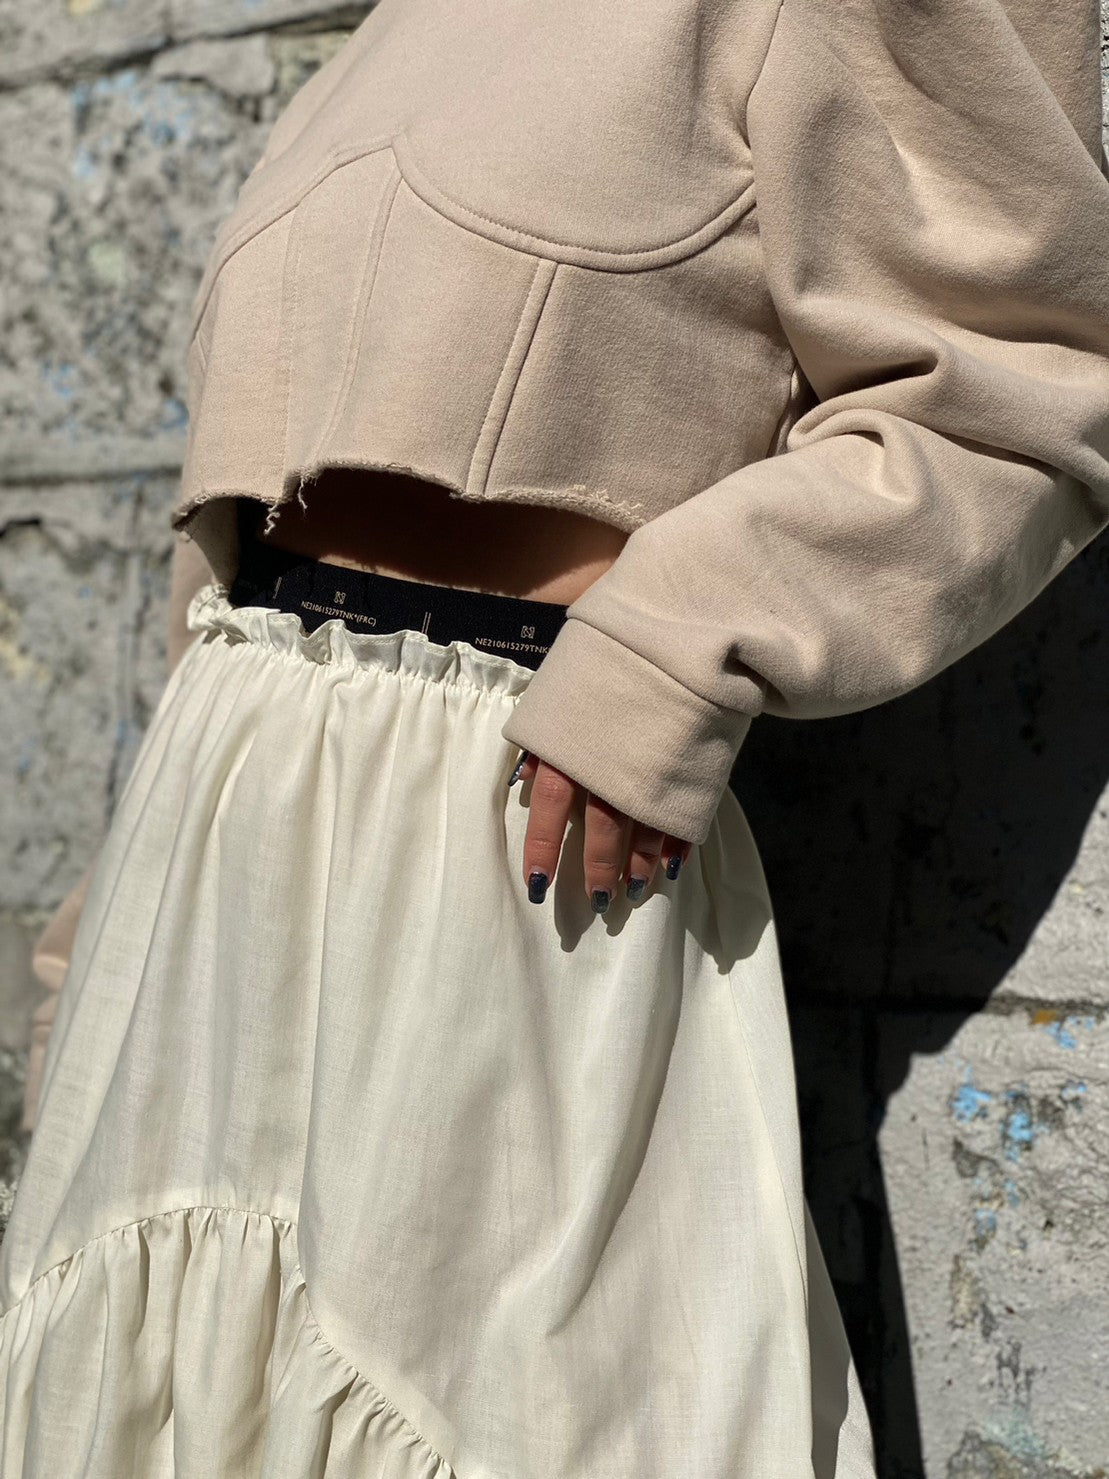 Stripe Taffeta Skirt (Ecru)